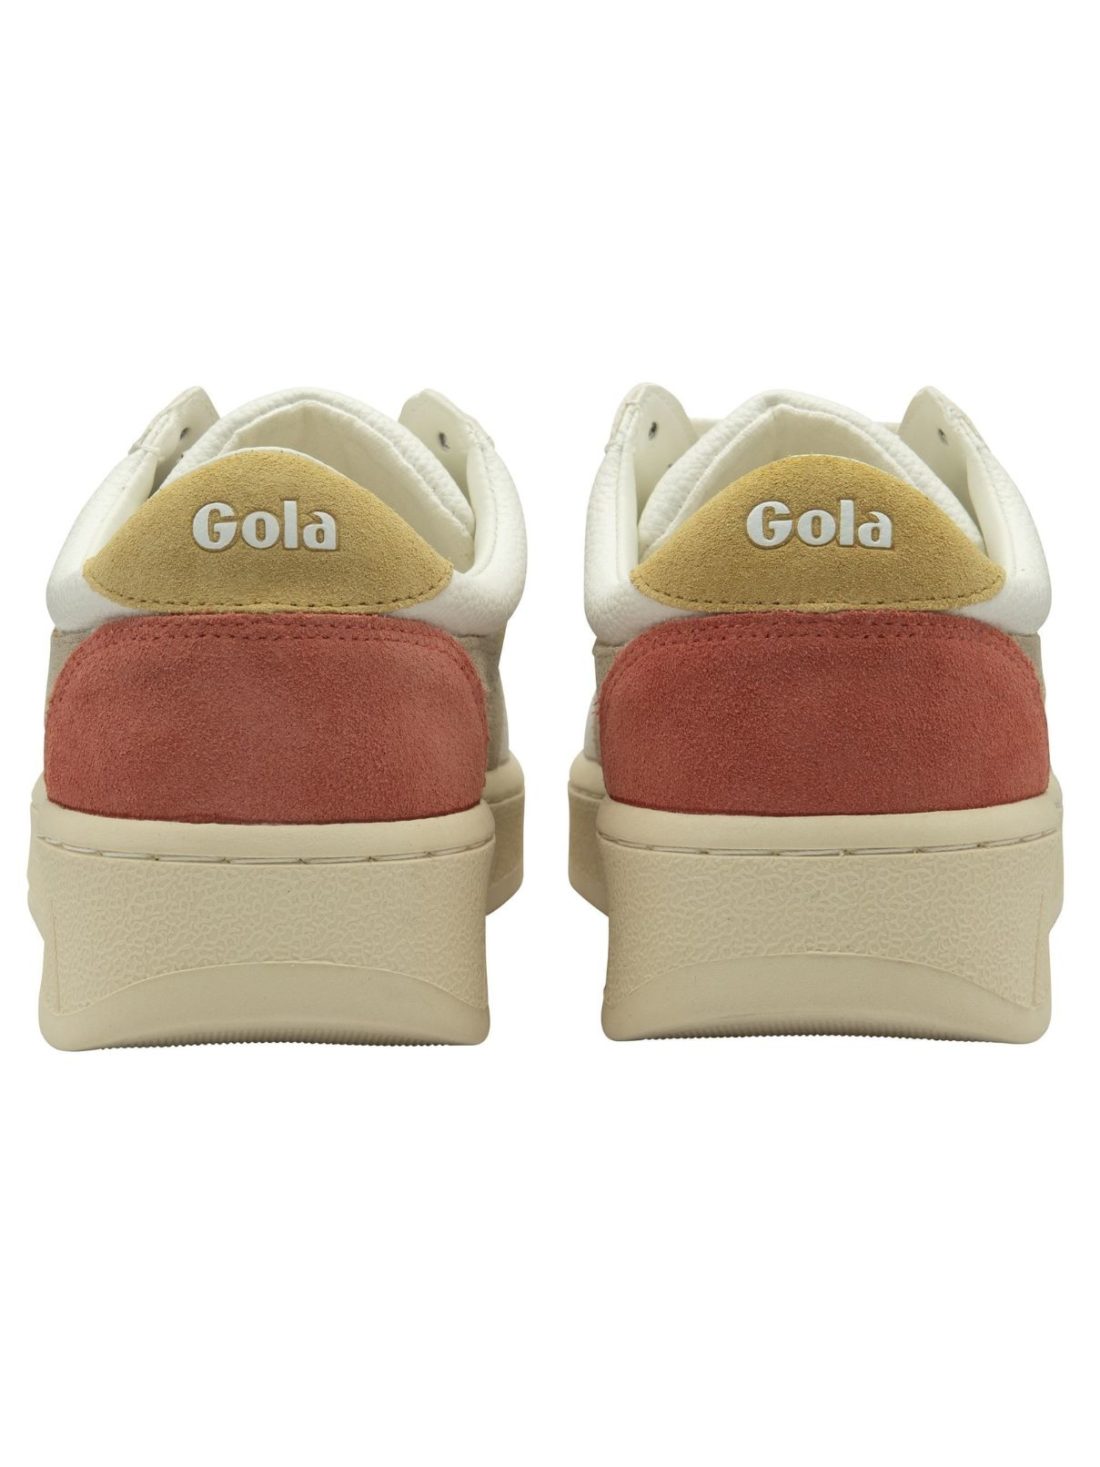 gola grandslam trident sneaker in white/bone/flux